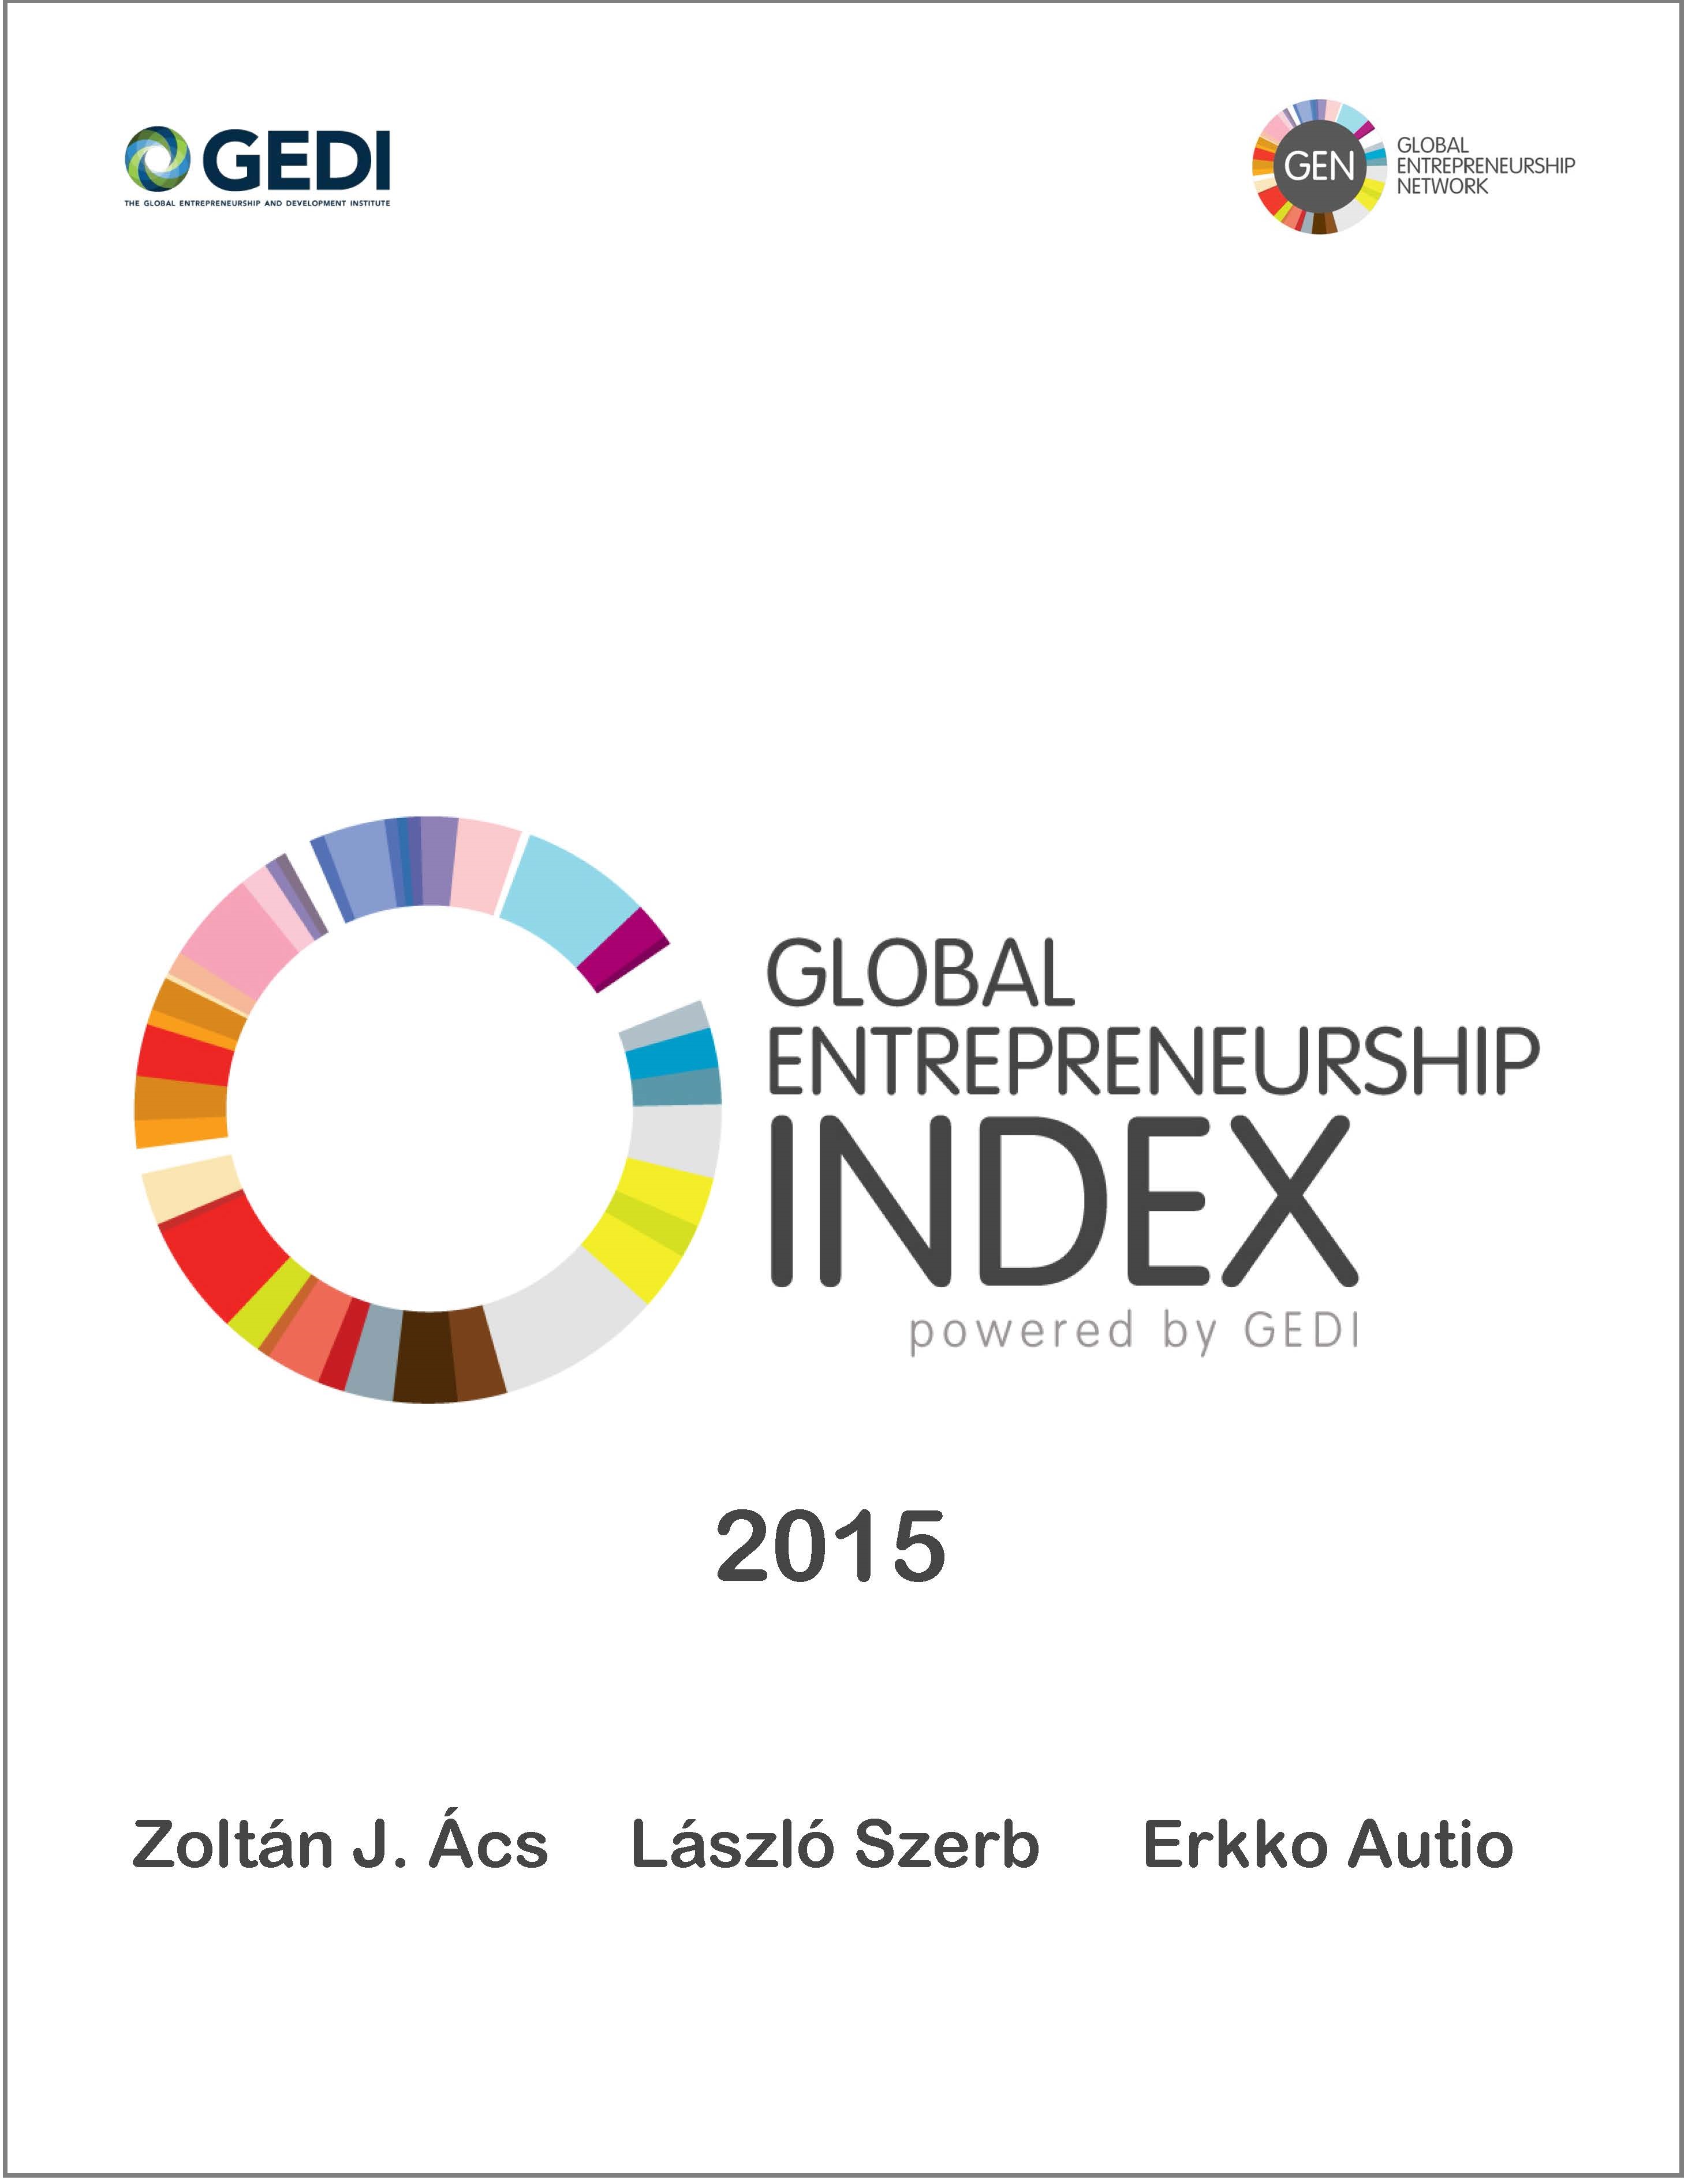 2015 Global Entrepreneurship Index - $10 fee